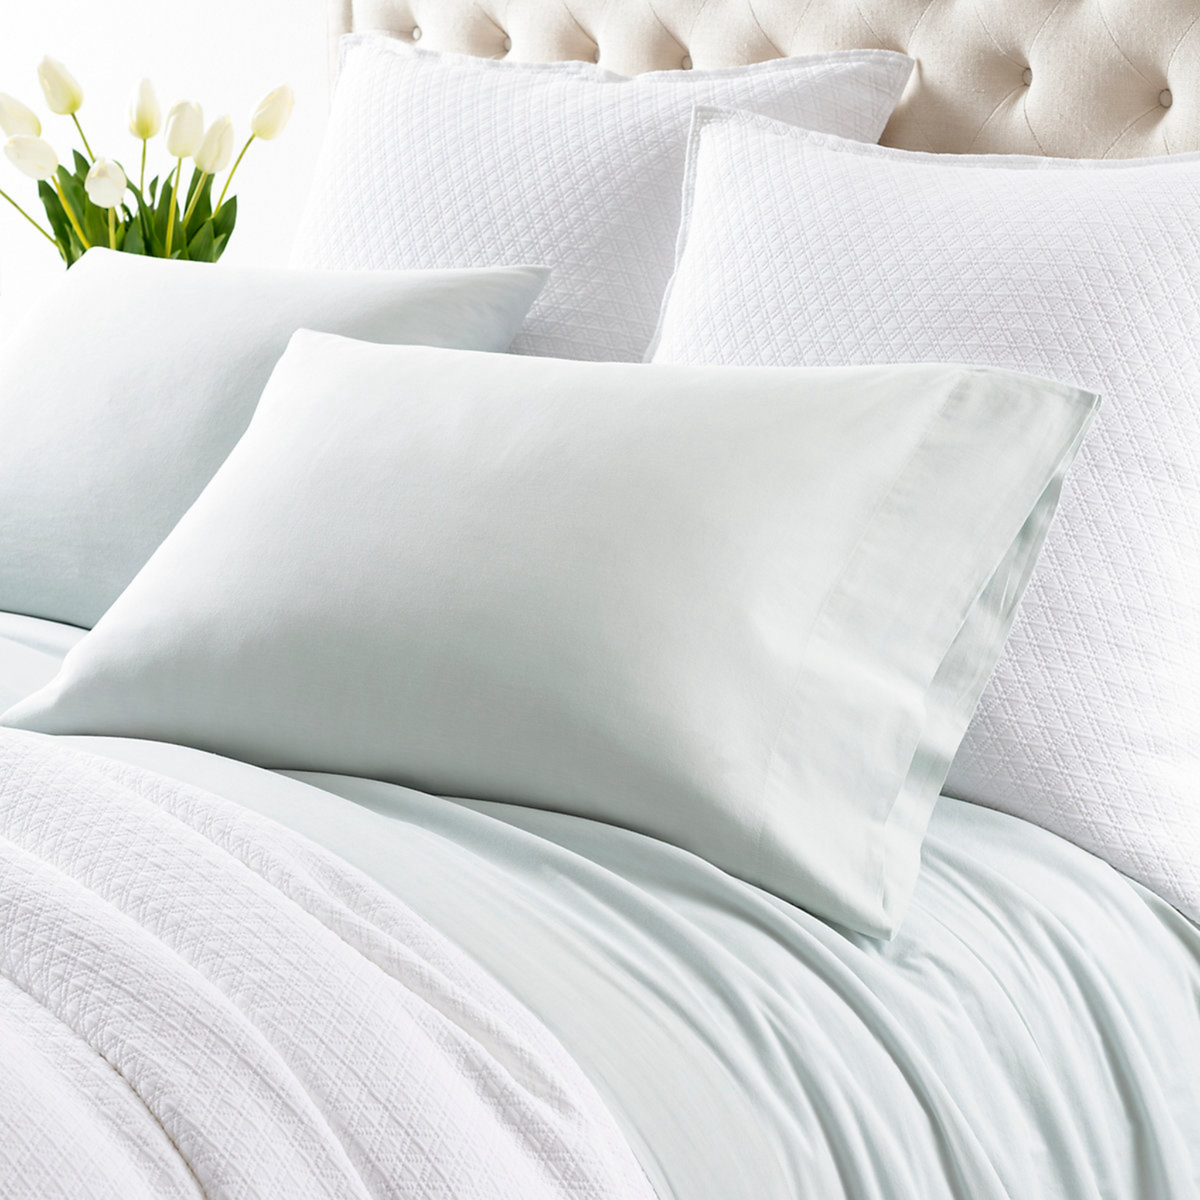 Pillowcase Closeup of Pine Cone Hill Cozy Cotton Bedding in Sky Color